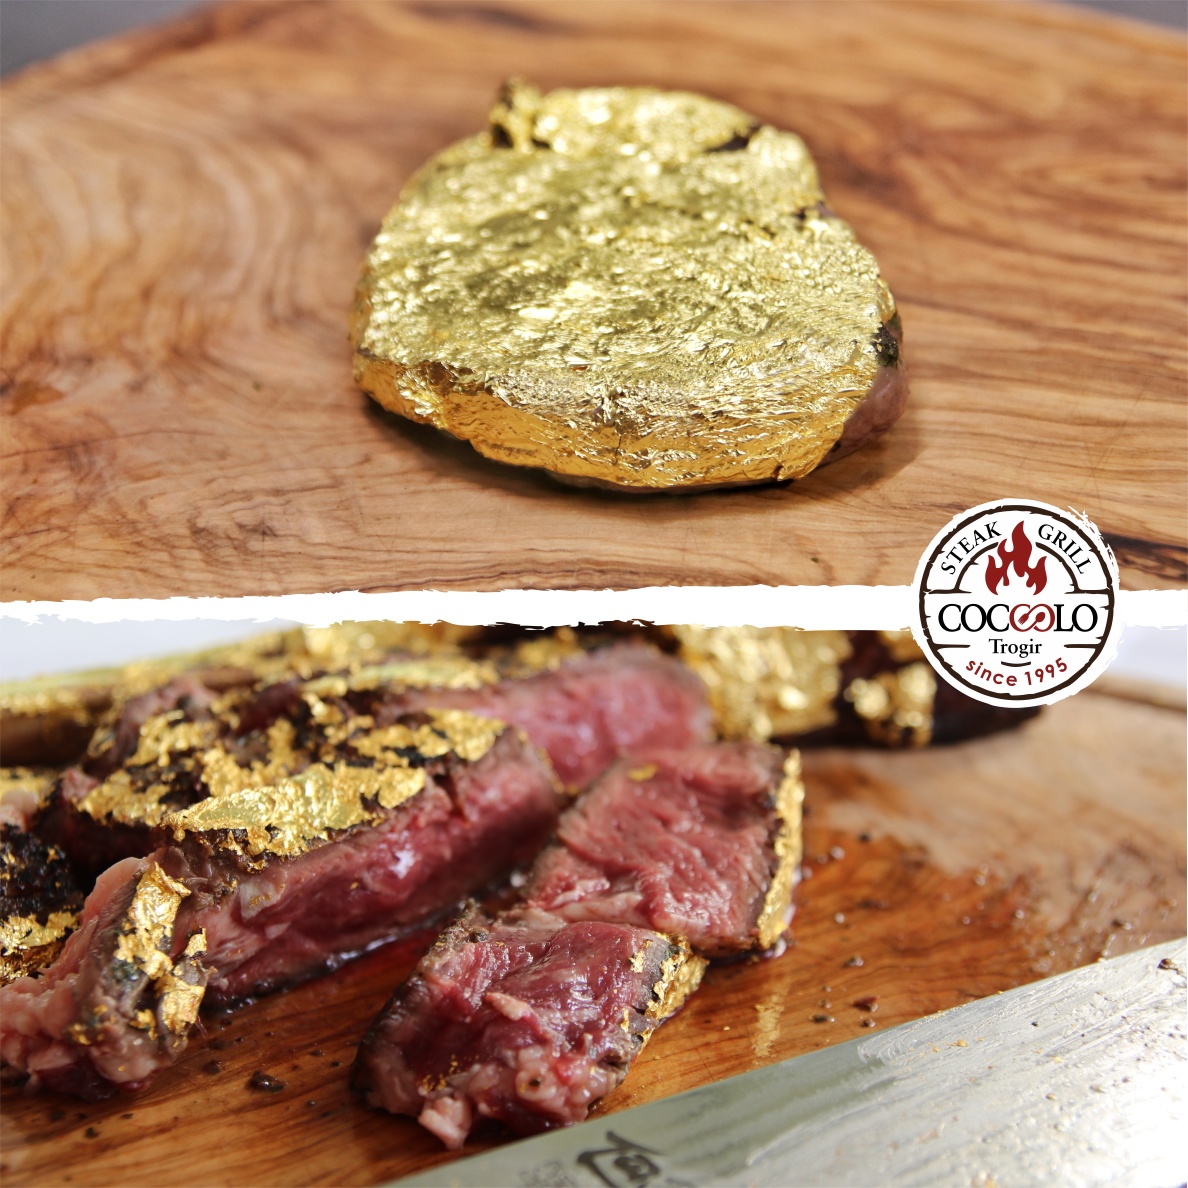  Popular Trogir restaurant first in Croatia to serve up gold steak